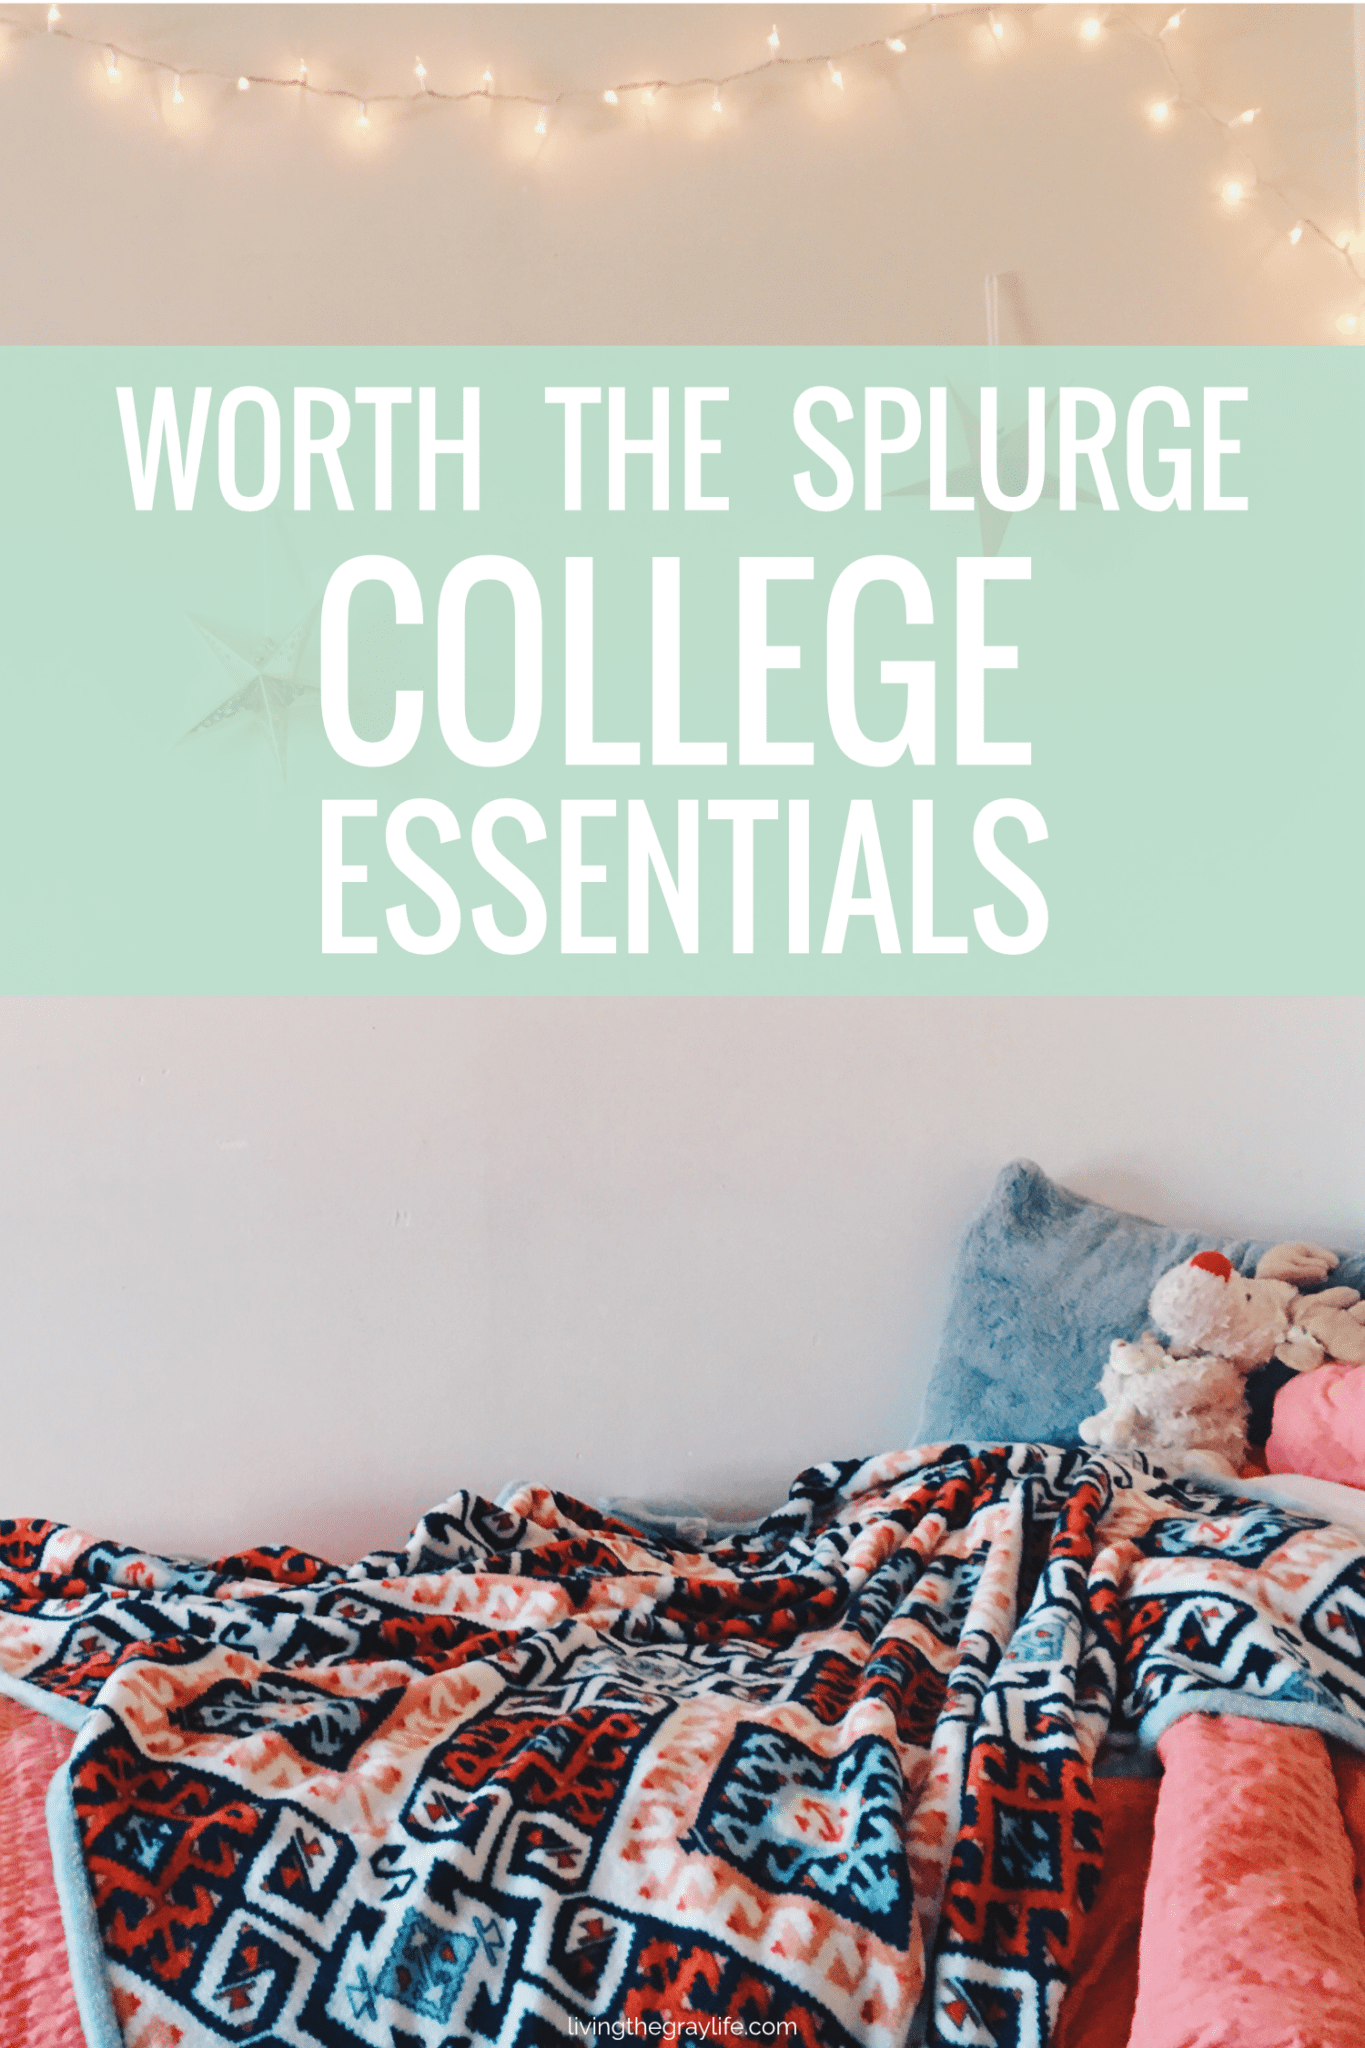 Essential college items worth the splurge.